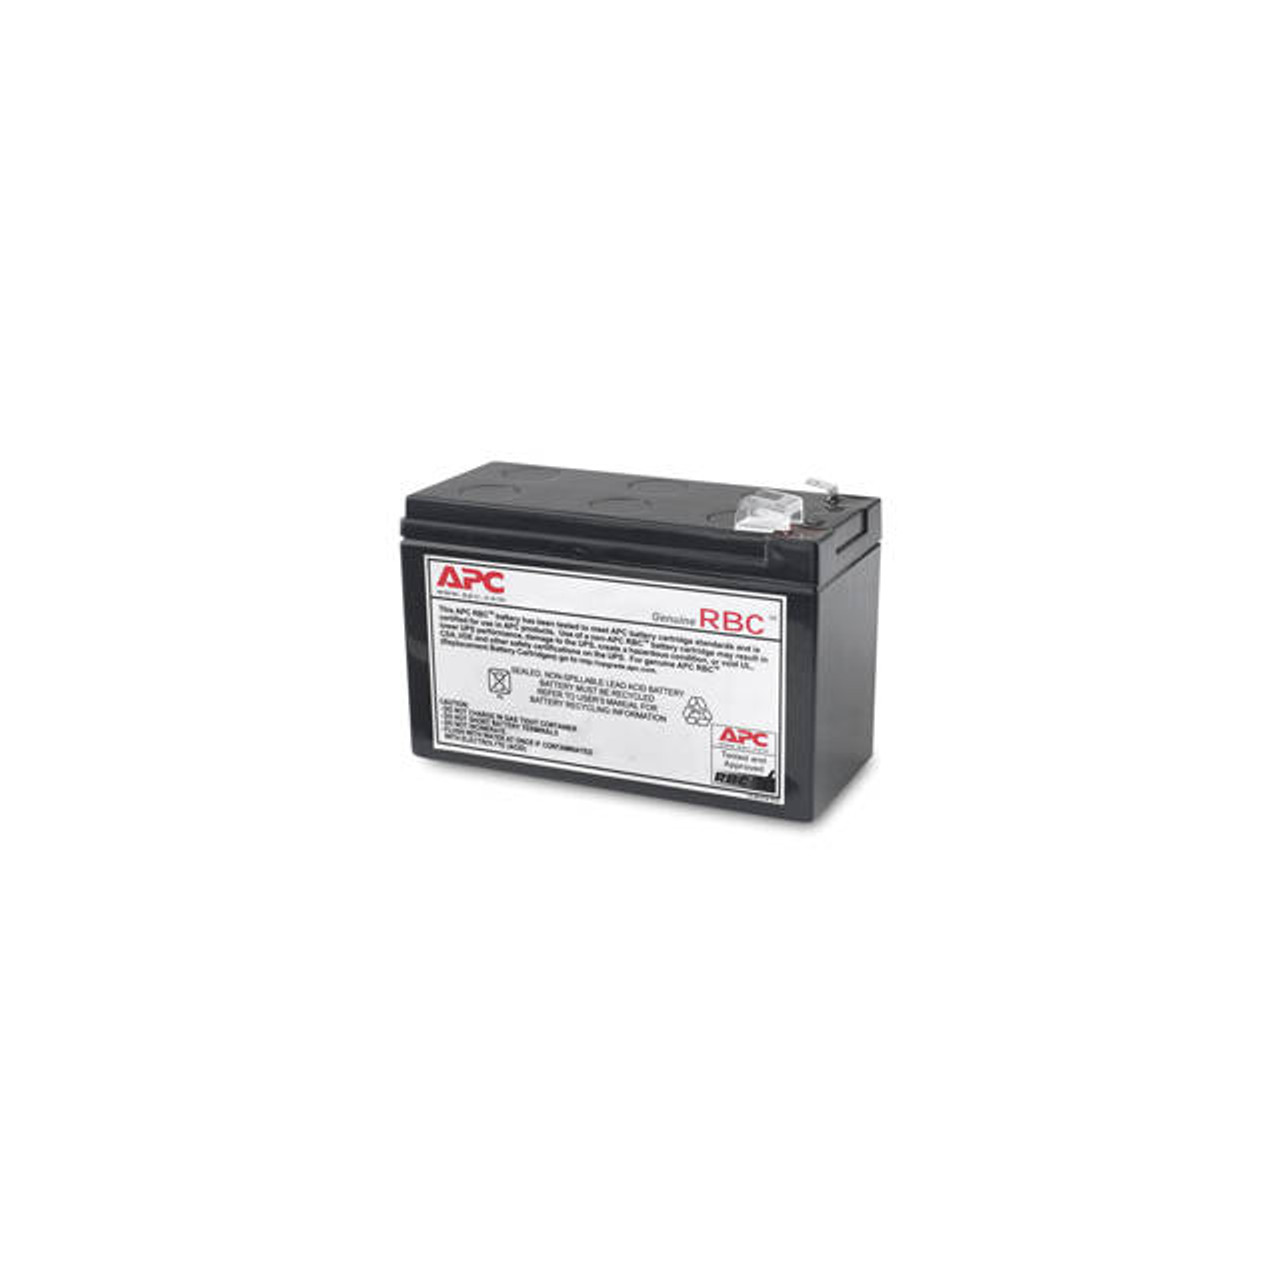 APC APCRBC110 Replacement Battery Cartridge #110 For APC BE550G